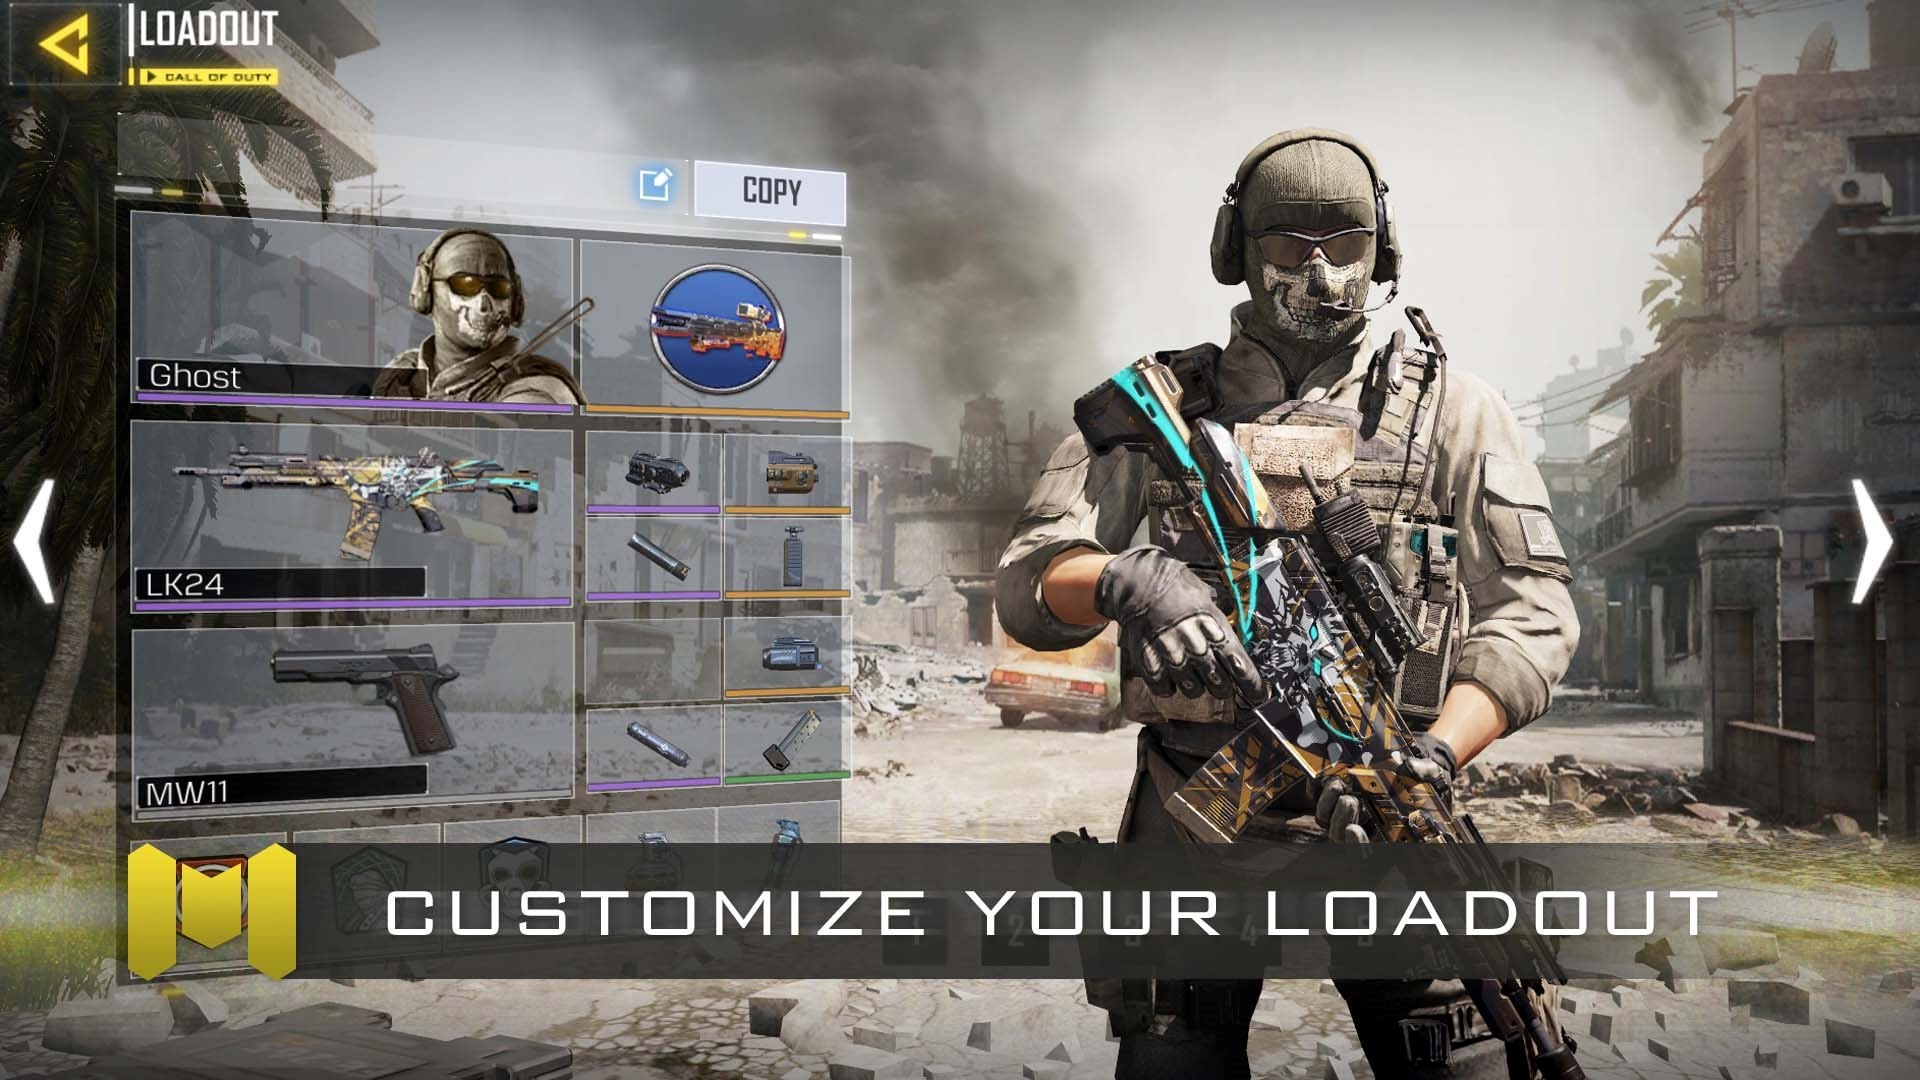 Garena 宣布取得 決勝時刻 手機遊戲 Call Of Duty Mobile 台灣等地區代理權 Call Of Duty Mobile 巴哈姆特